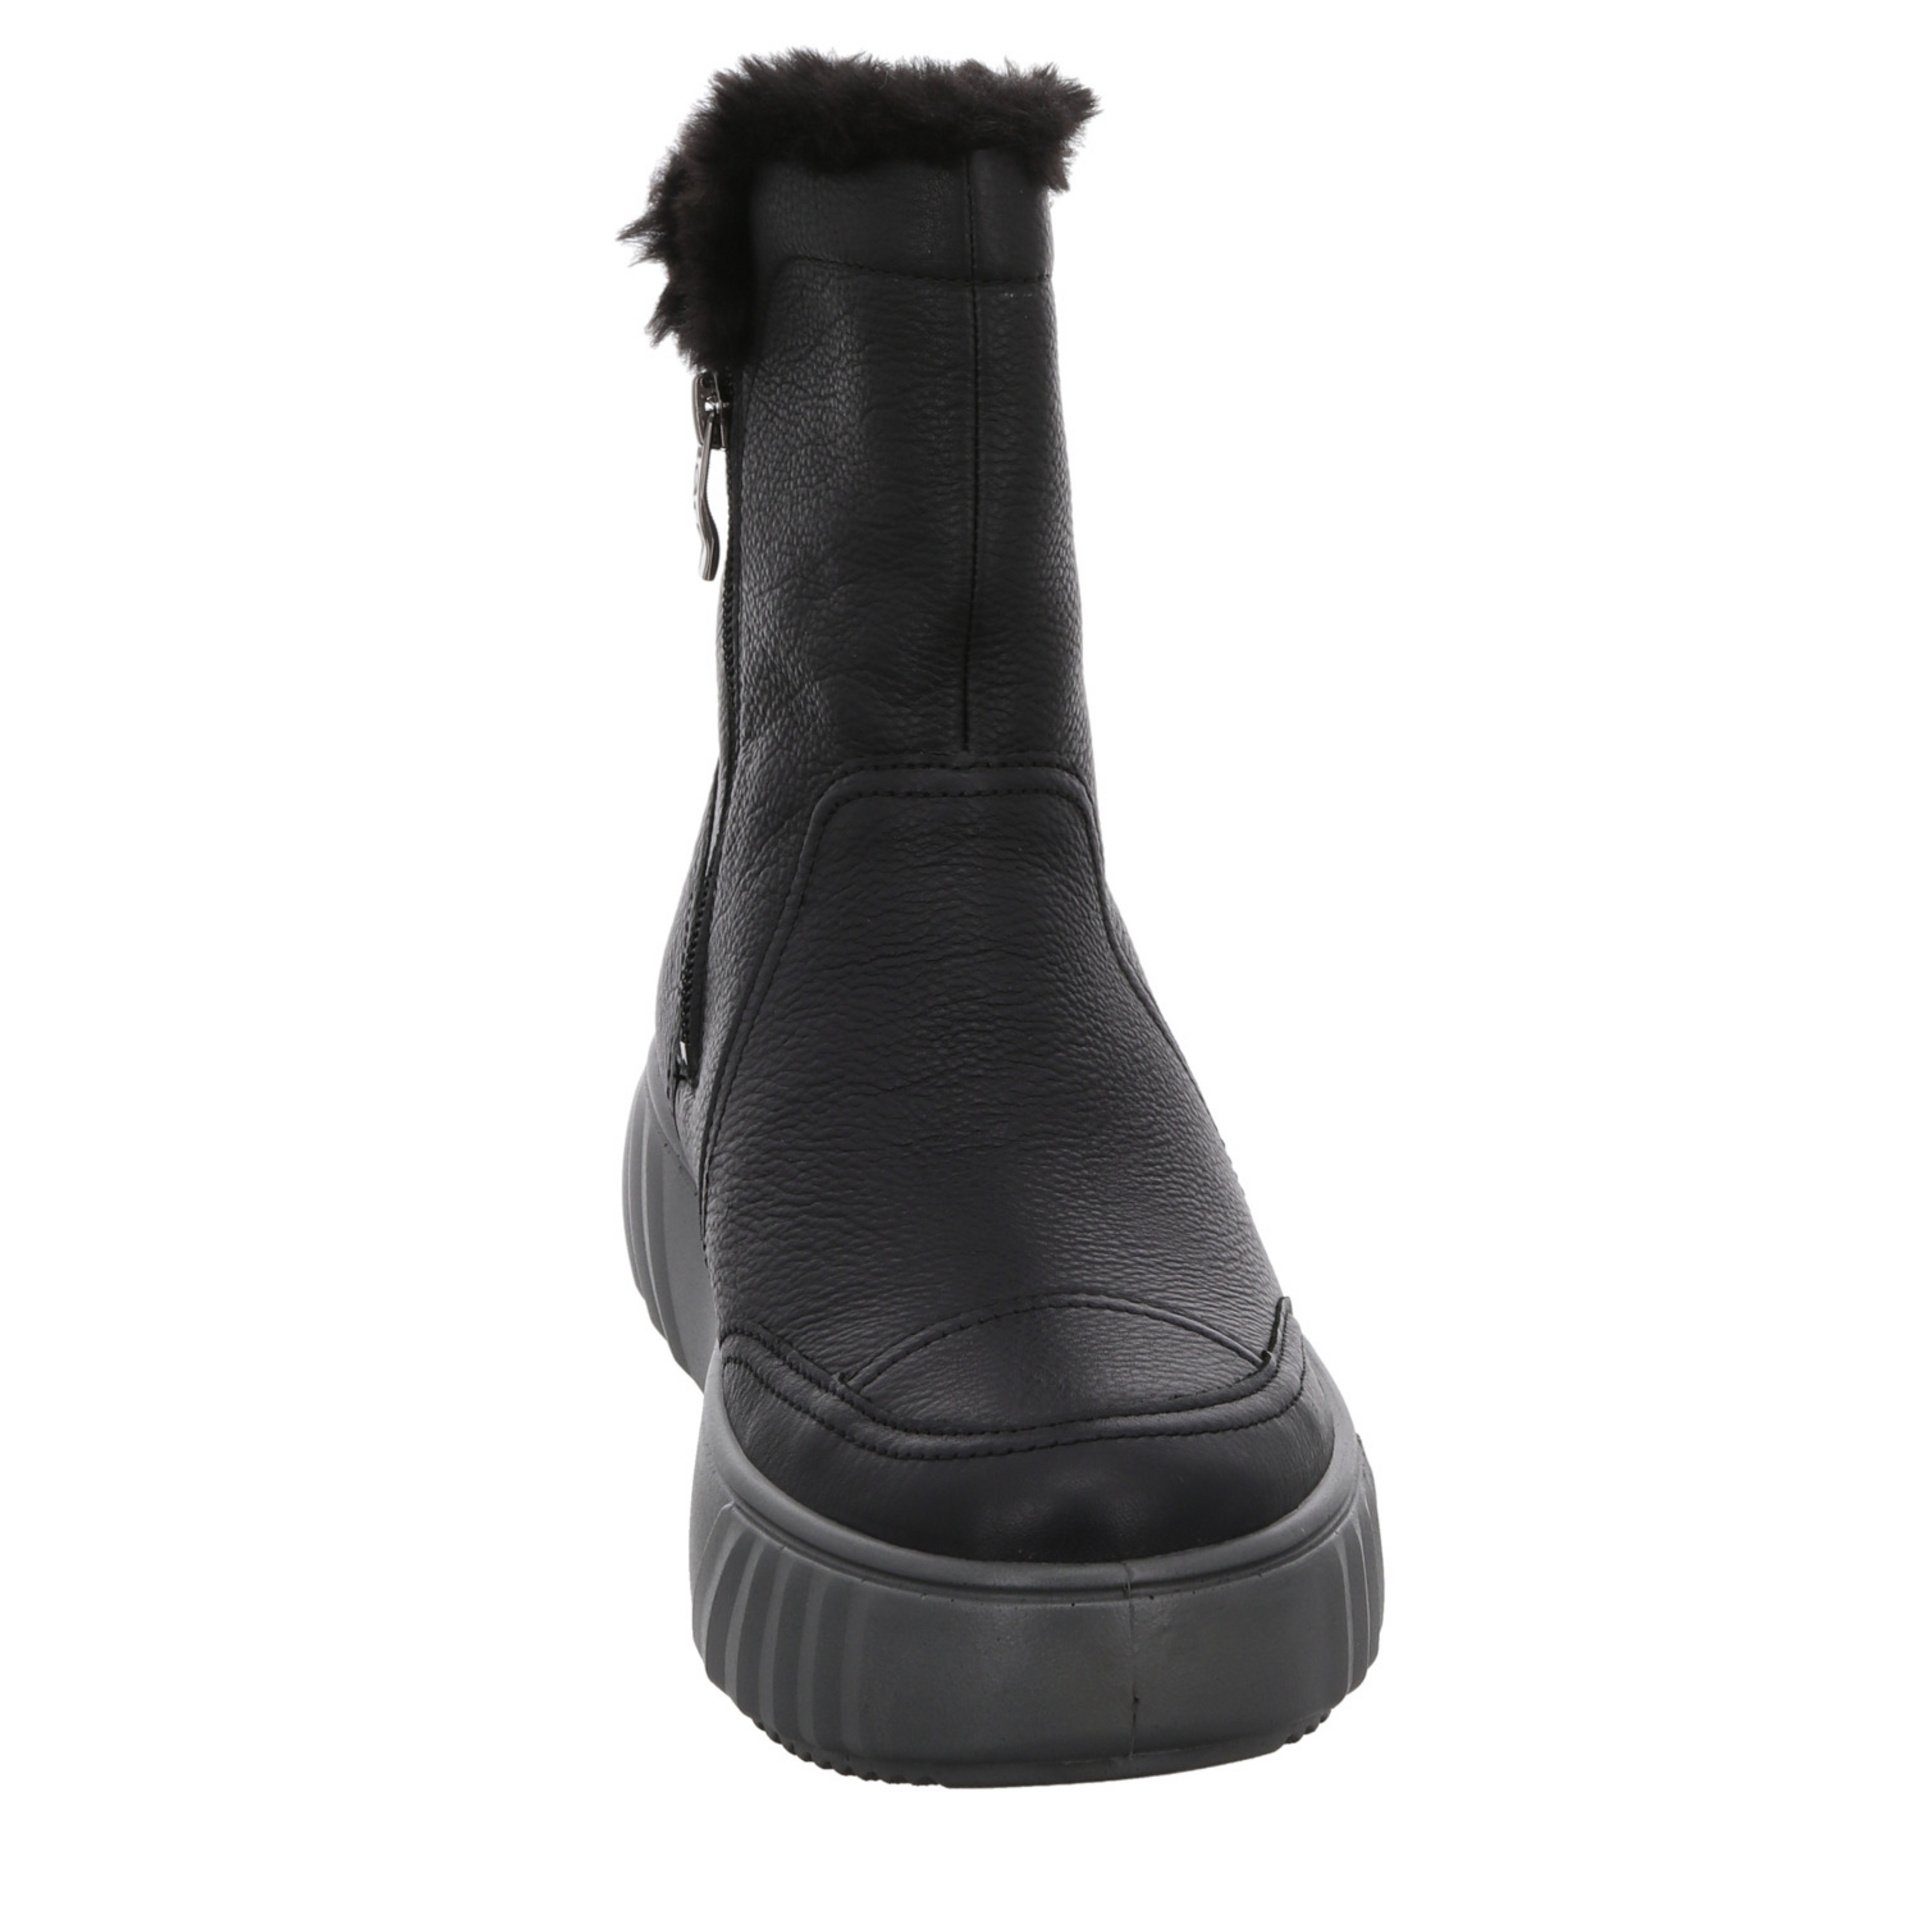 Freizeit Glattleder Stiefel Monaco Stiefelette Boots Ara Damen schwarz 046943 Schuhe Elegant